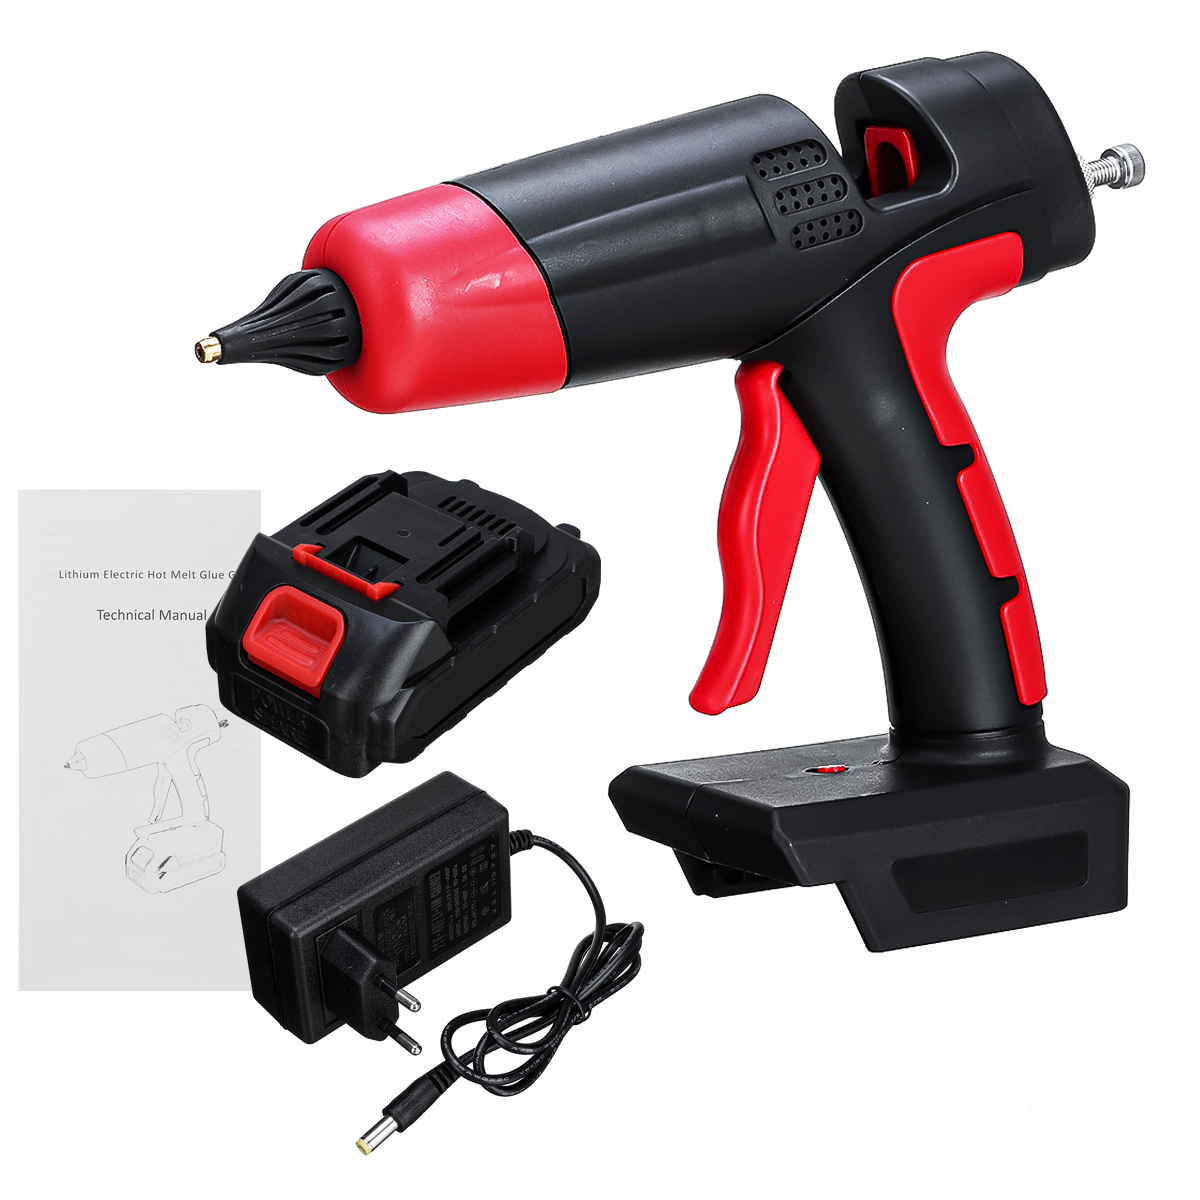 Hot-Melt-Glue-Guns-Cordless-Rechargeable-Hot-Glue-Applicator-Home-Improvement-Craft-DIY-For-Makita-B-1903421-18